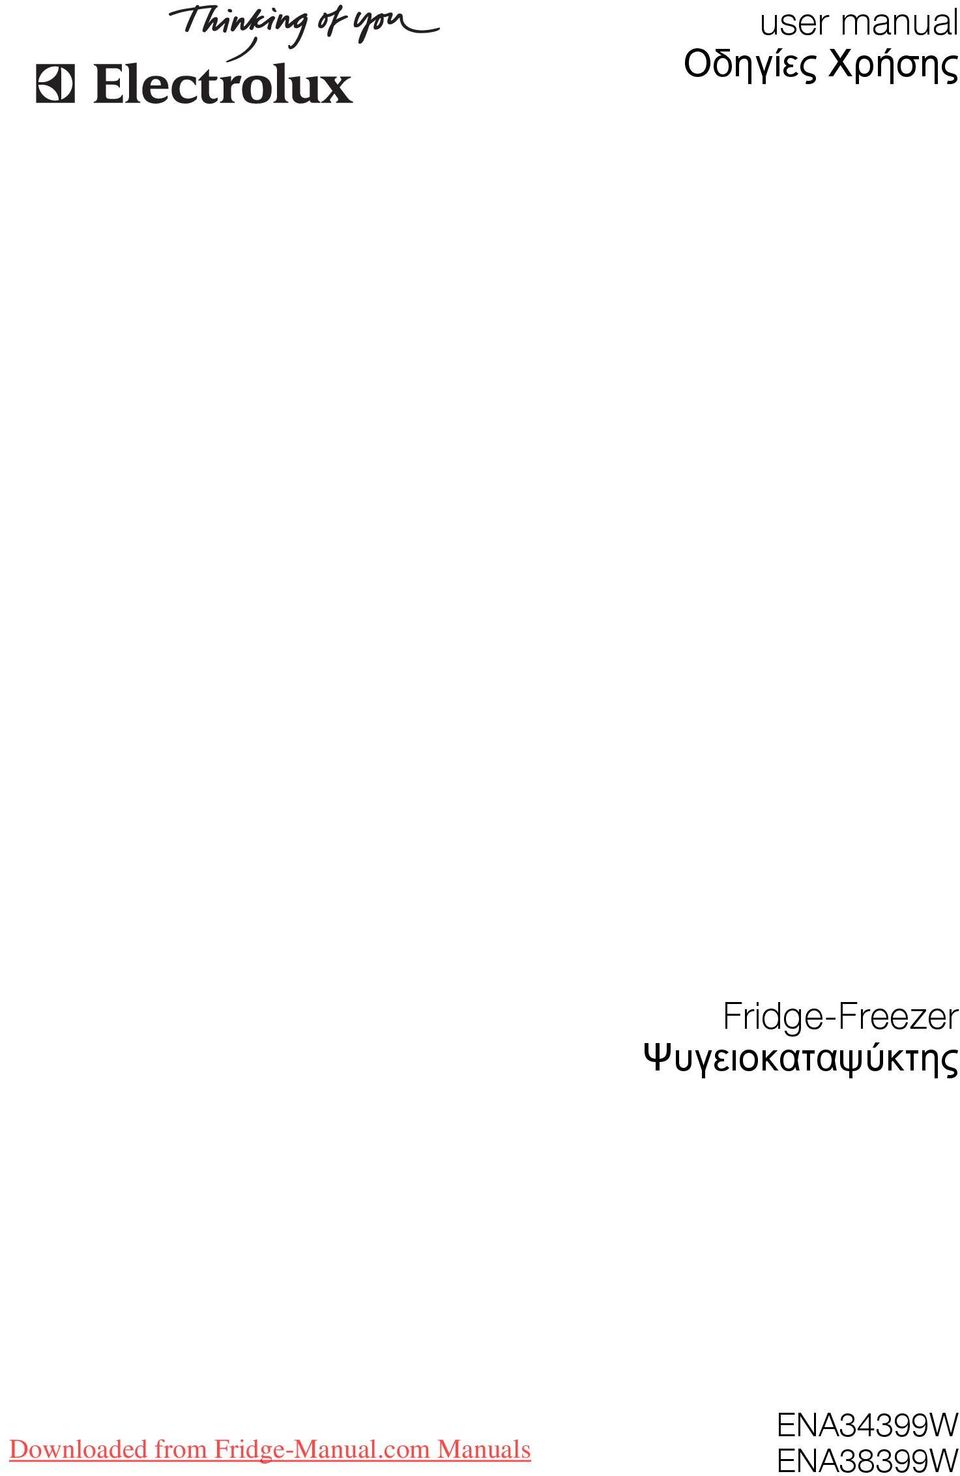 Fridge-Freezer